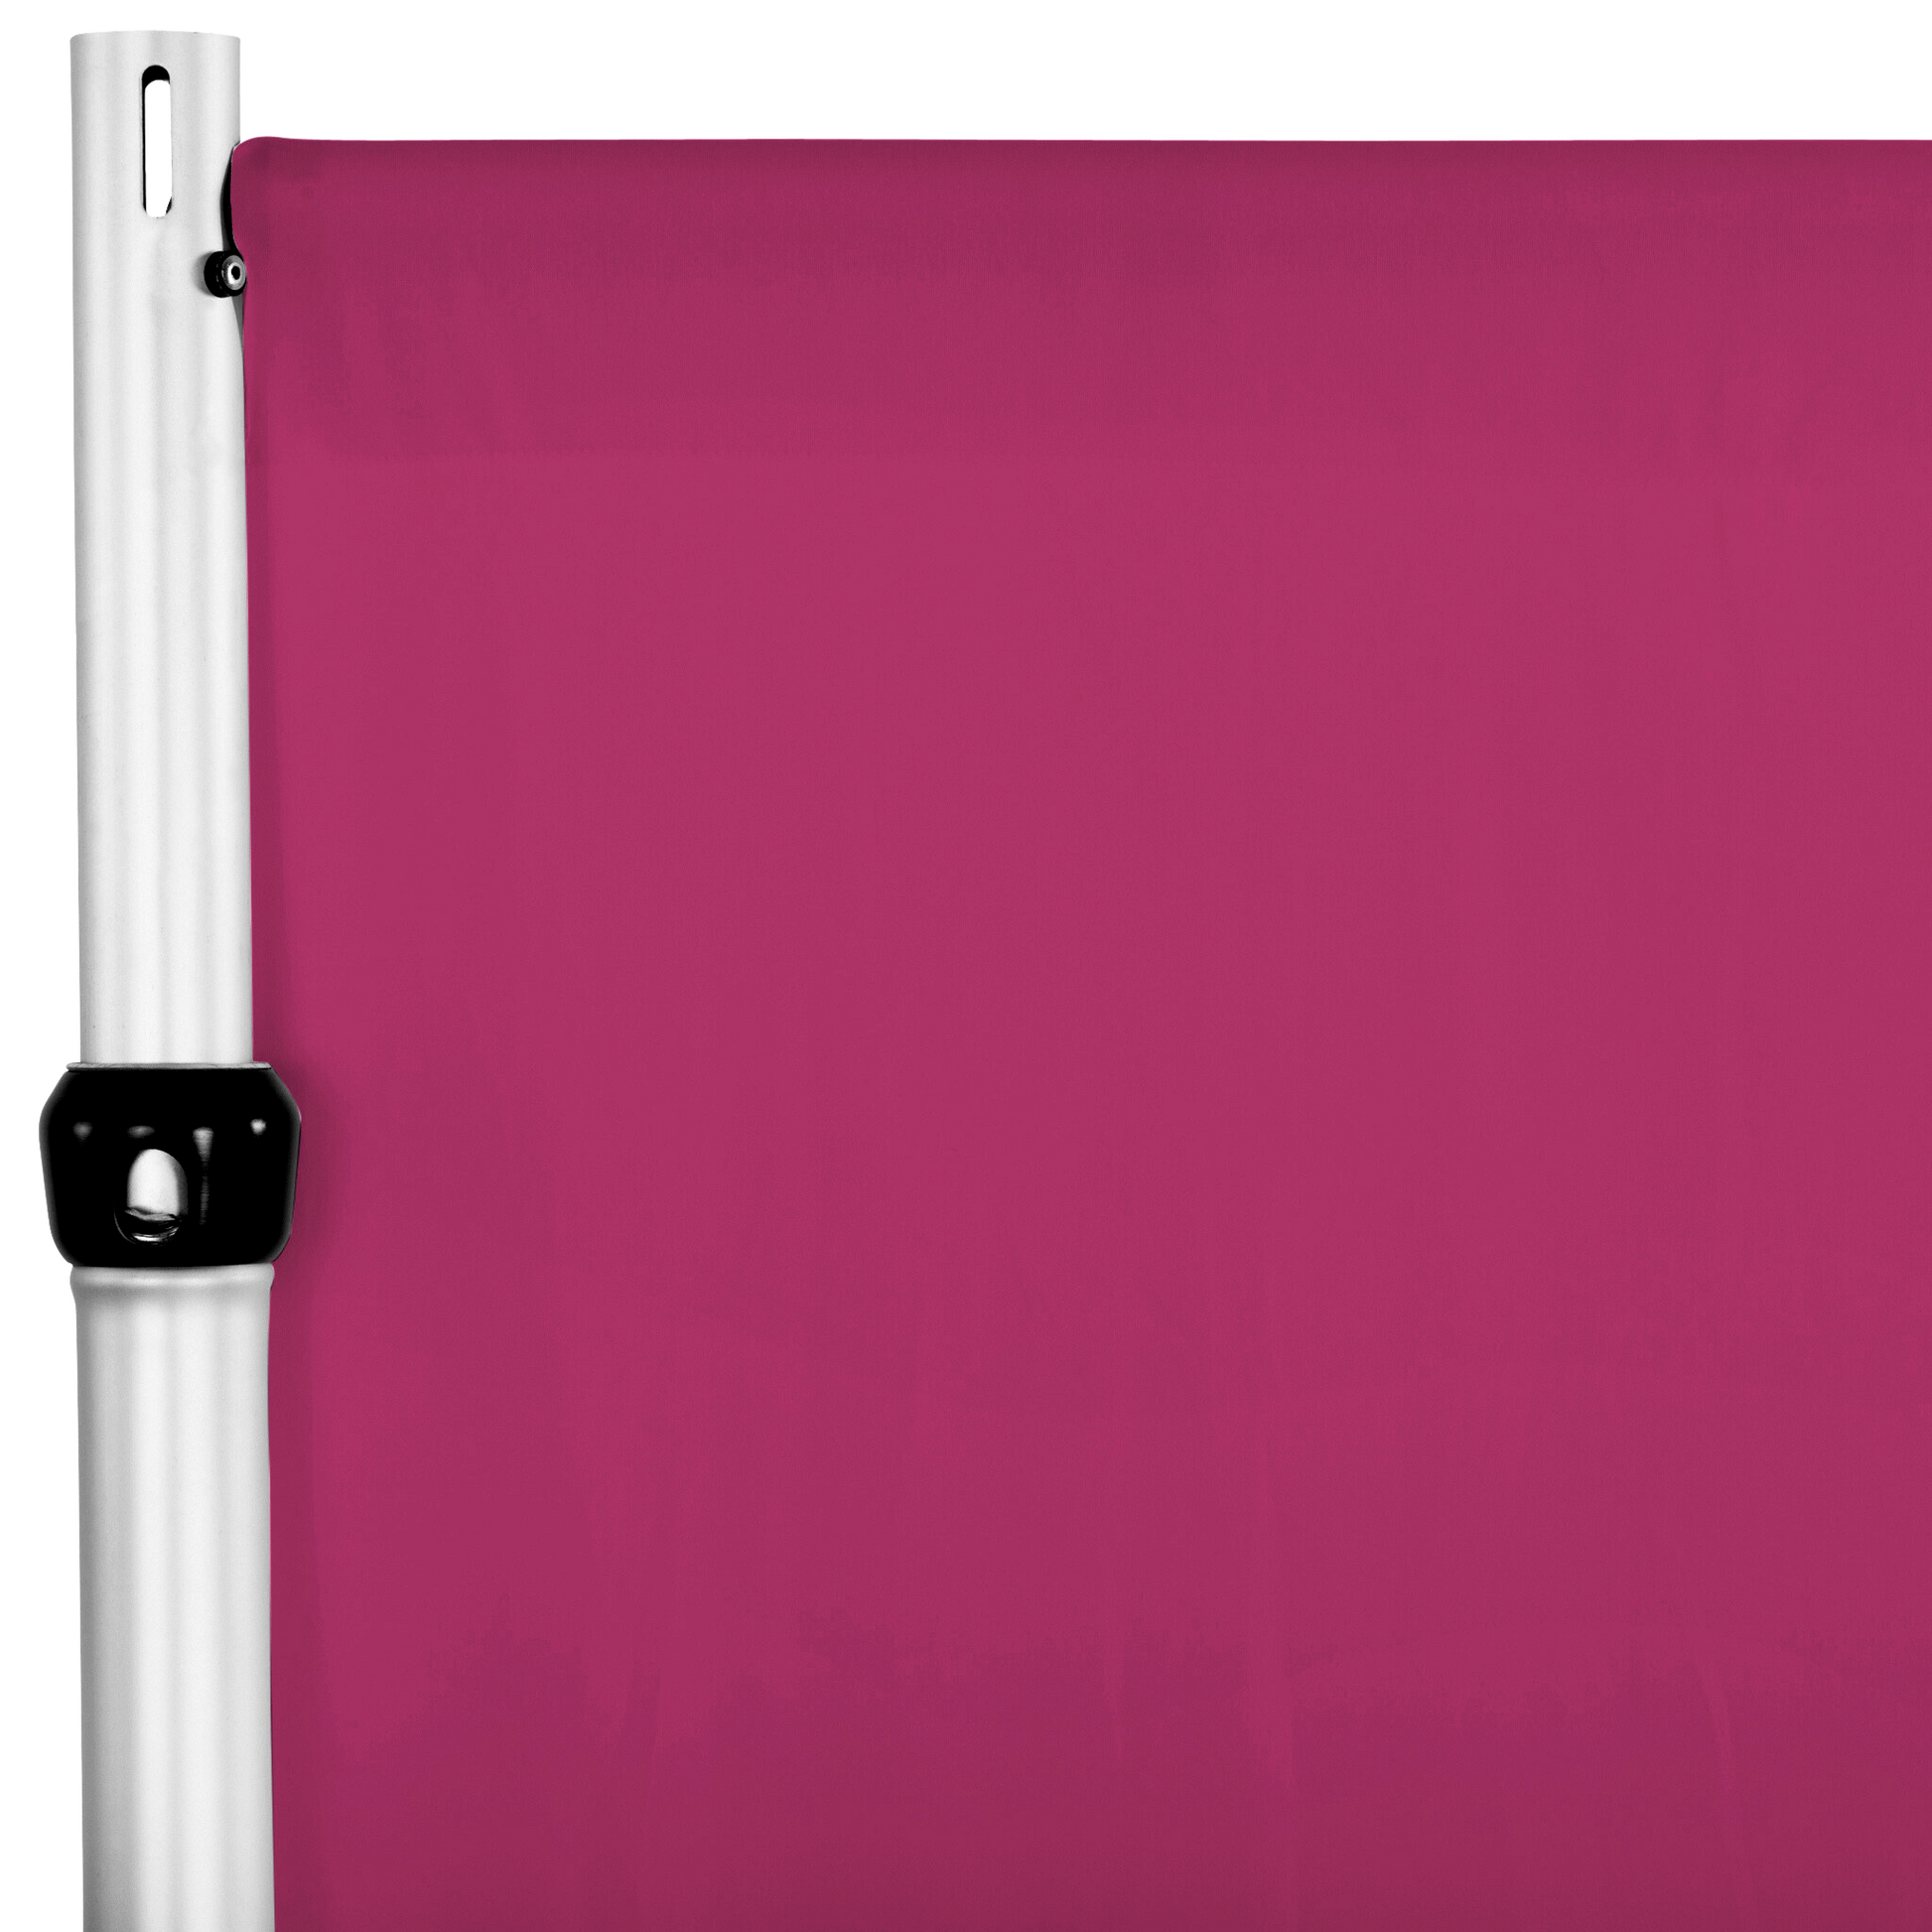 Spandex 4-way Stretch Drape Curtain 10ft H x 60" W - Mulberry